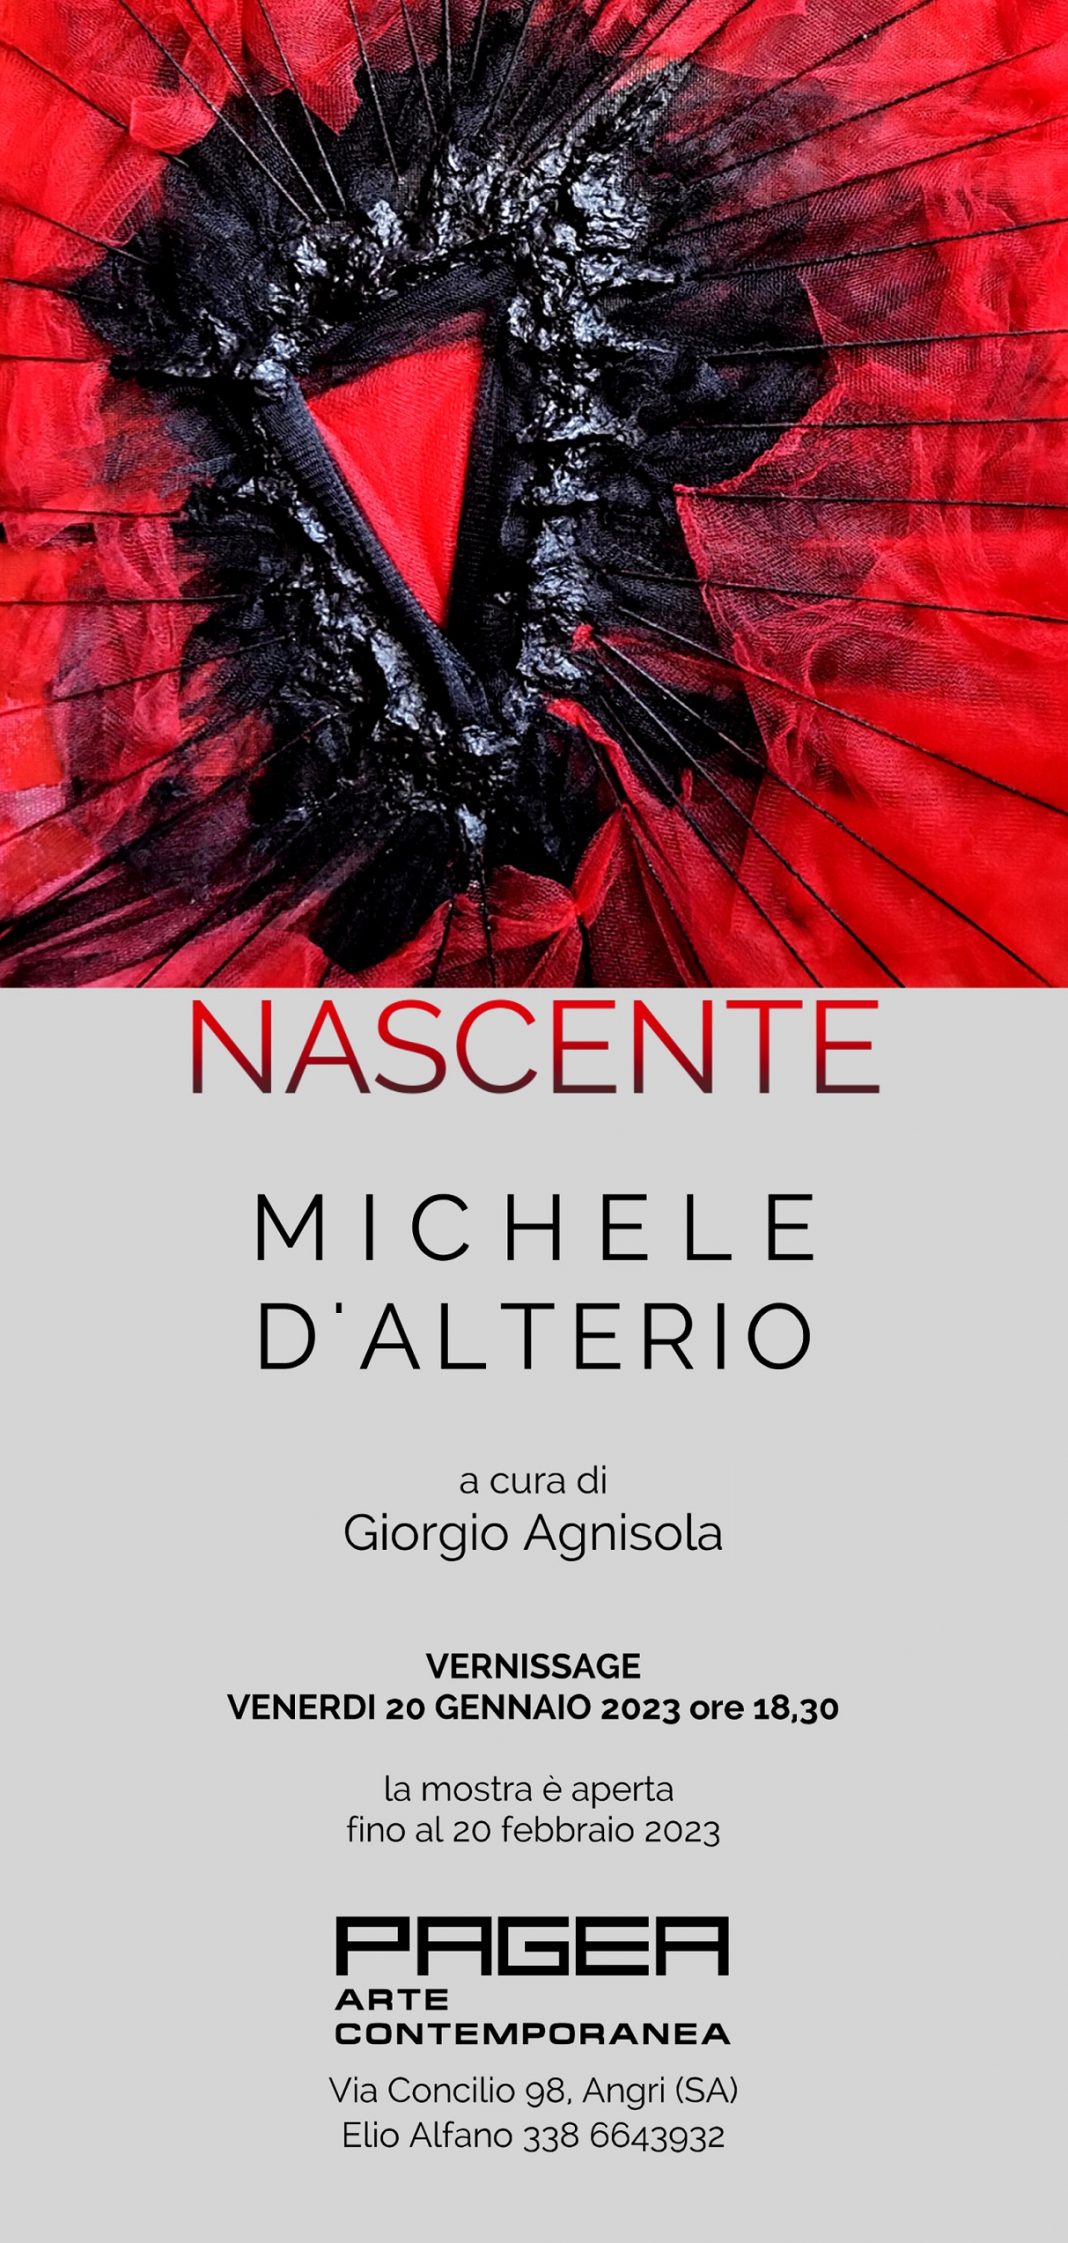 Michele D’Alterio – Nascentehttps://www.exibart.com/repository/media/formidable/11/img/798/invito-pagea-1068x2243.jpg